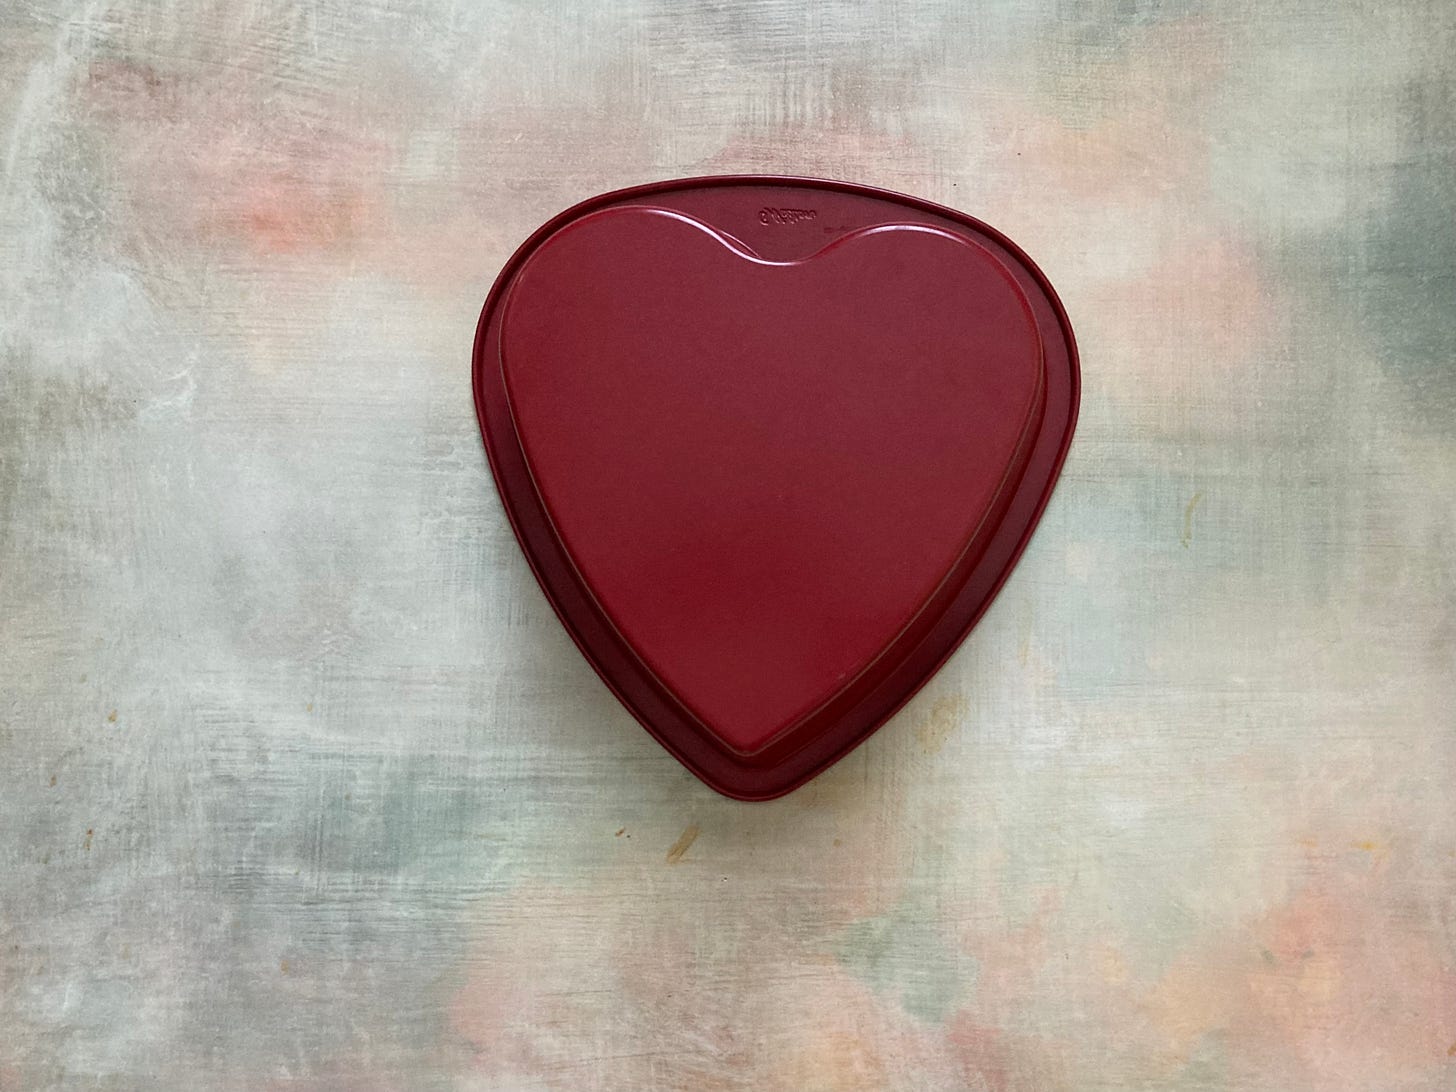 heart-shaped pan